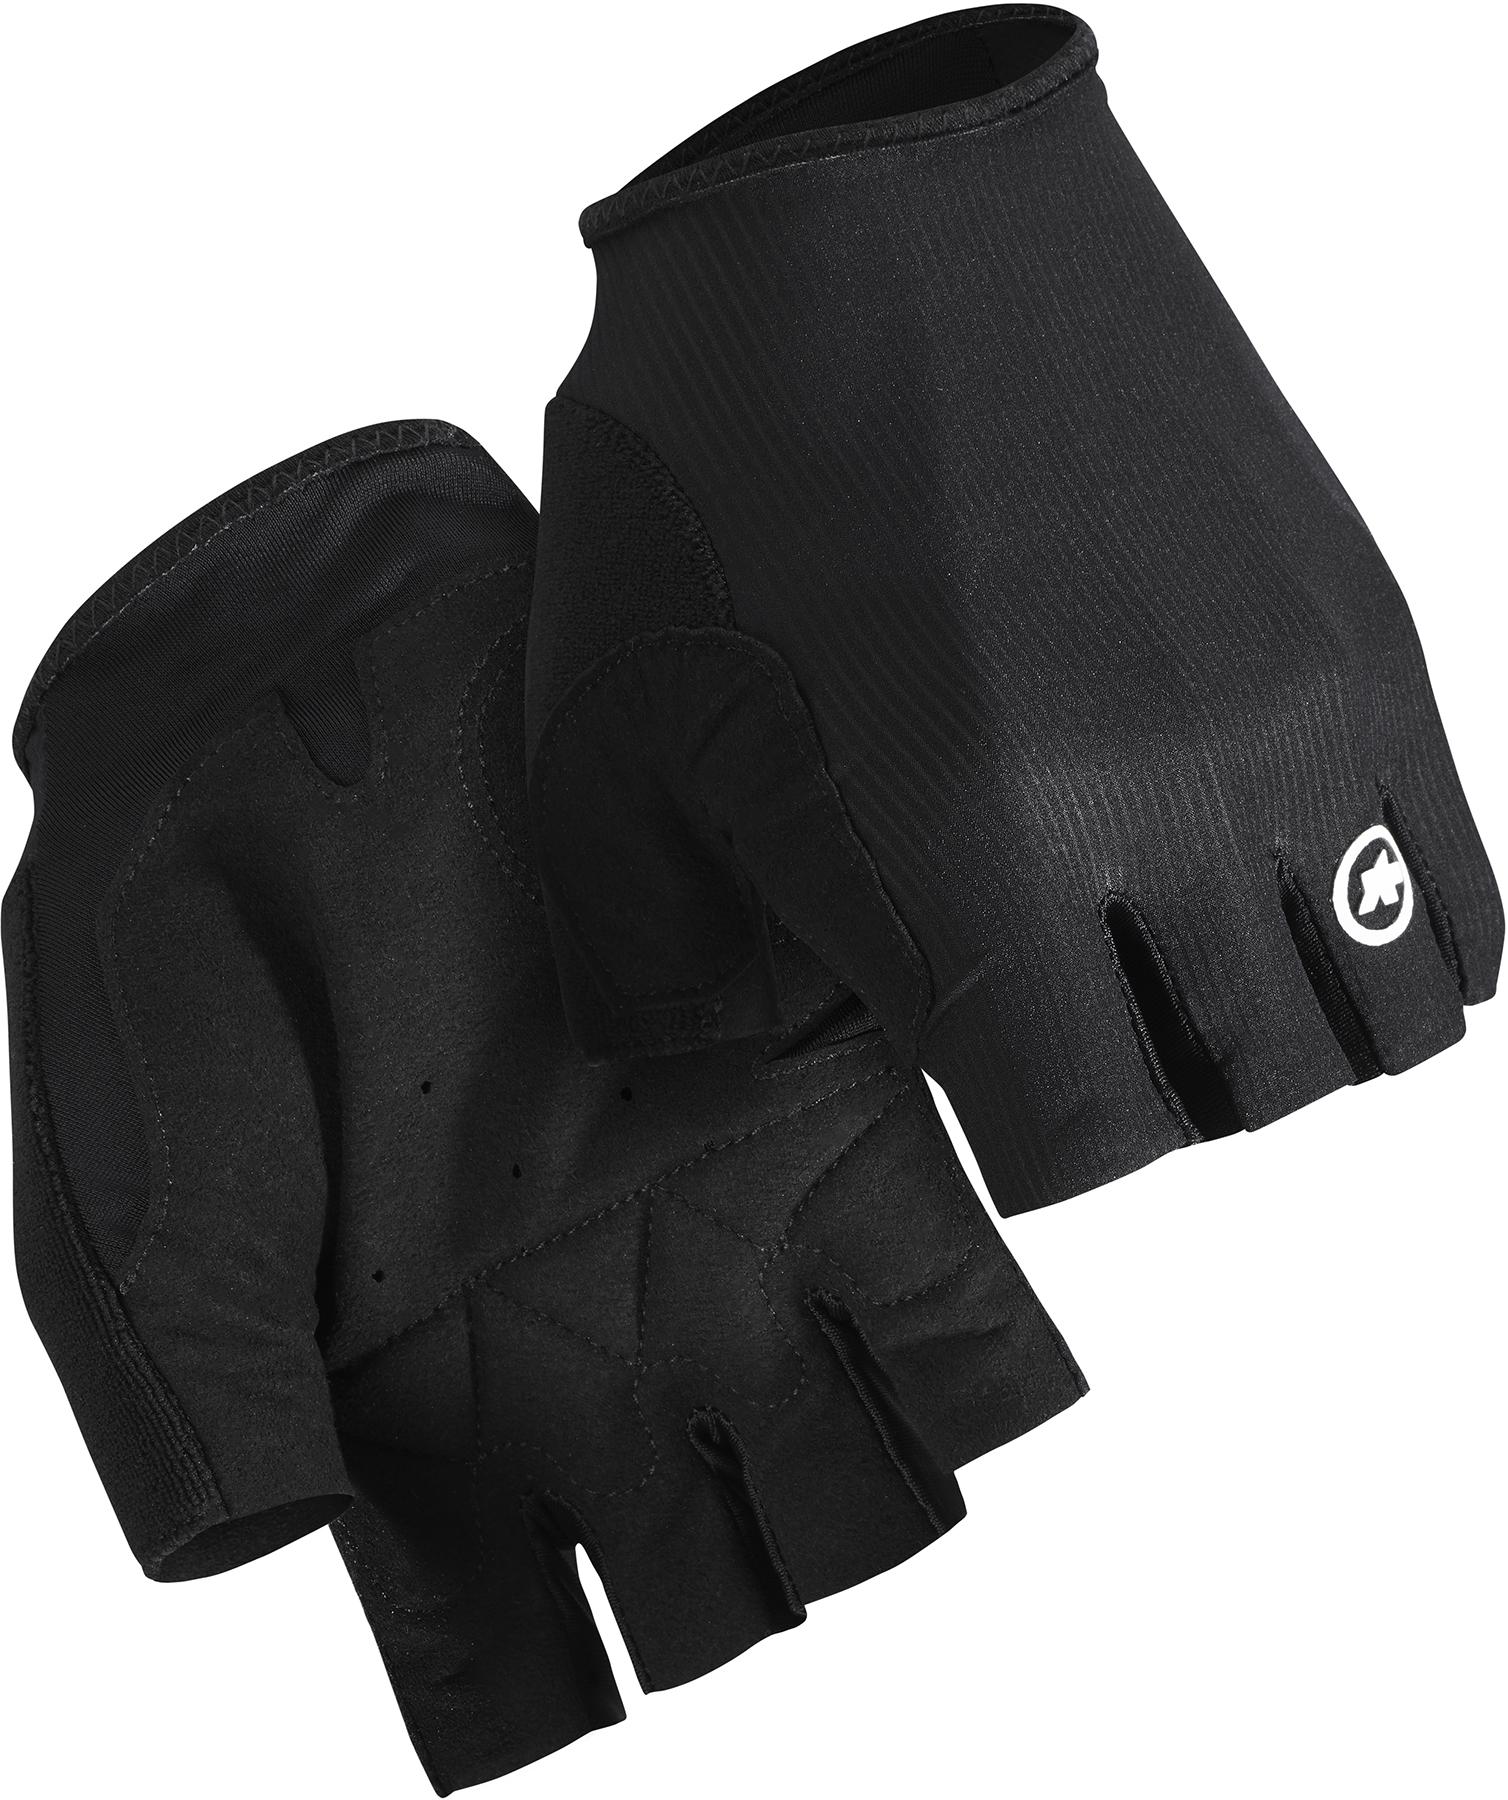 Assos Rs Gloves Targa  Black Series